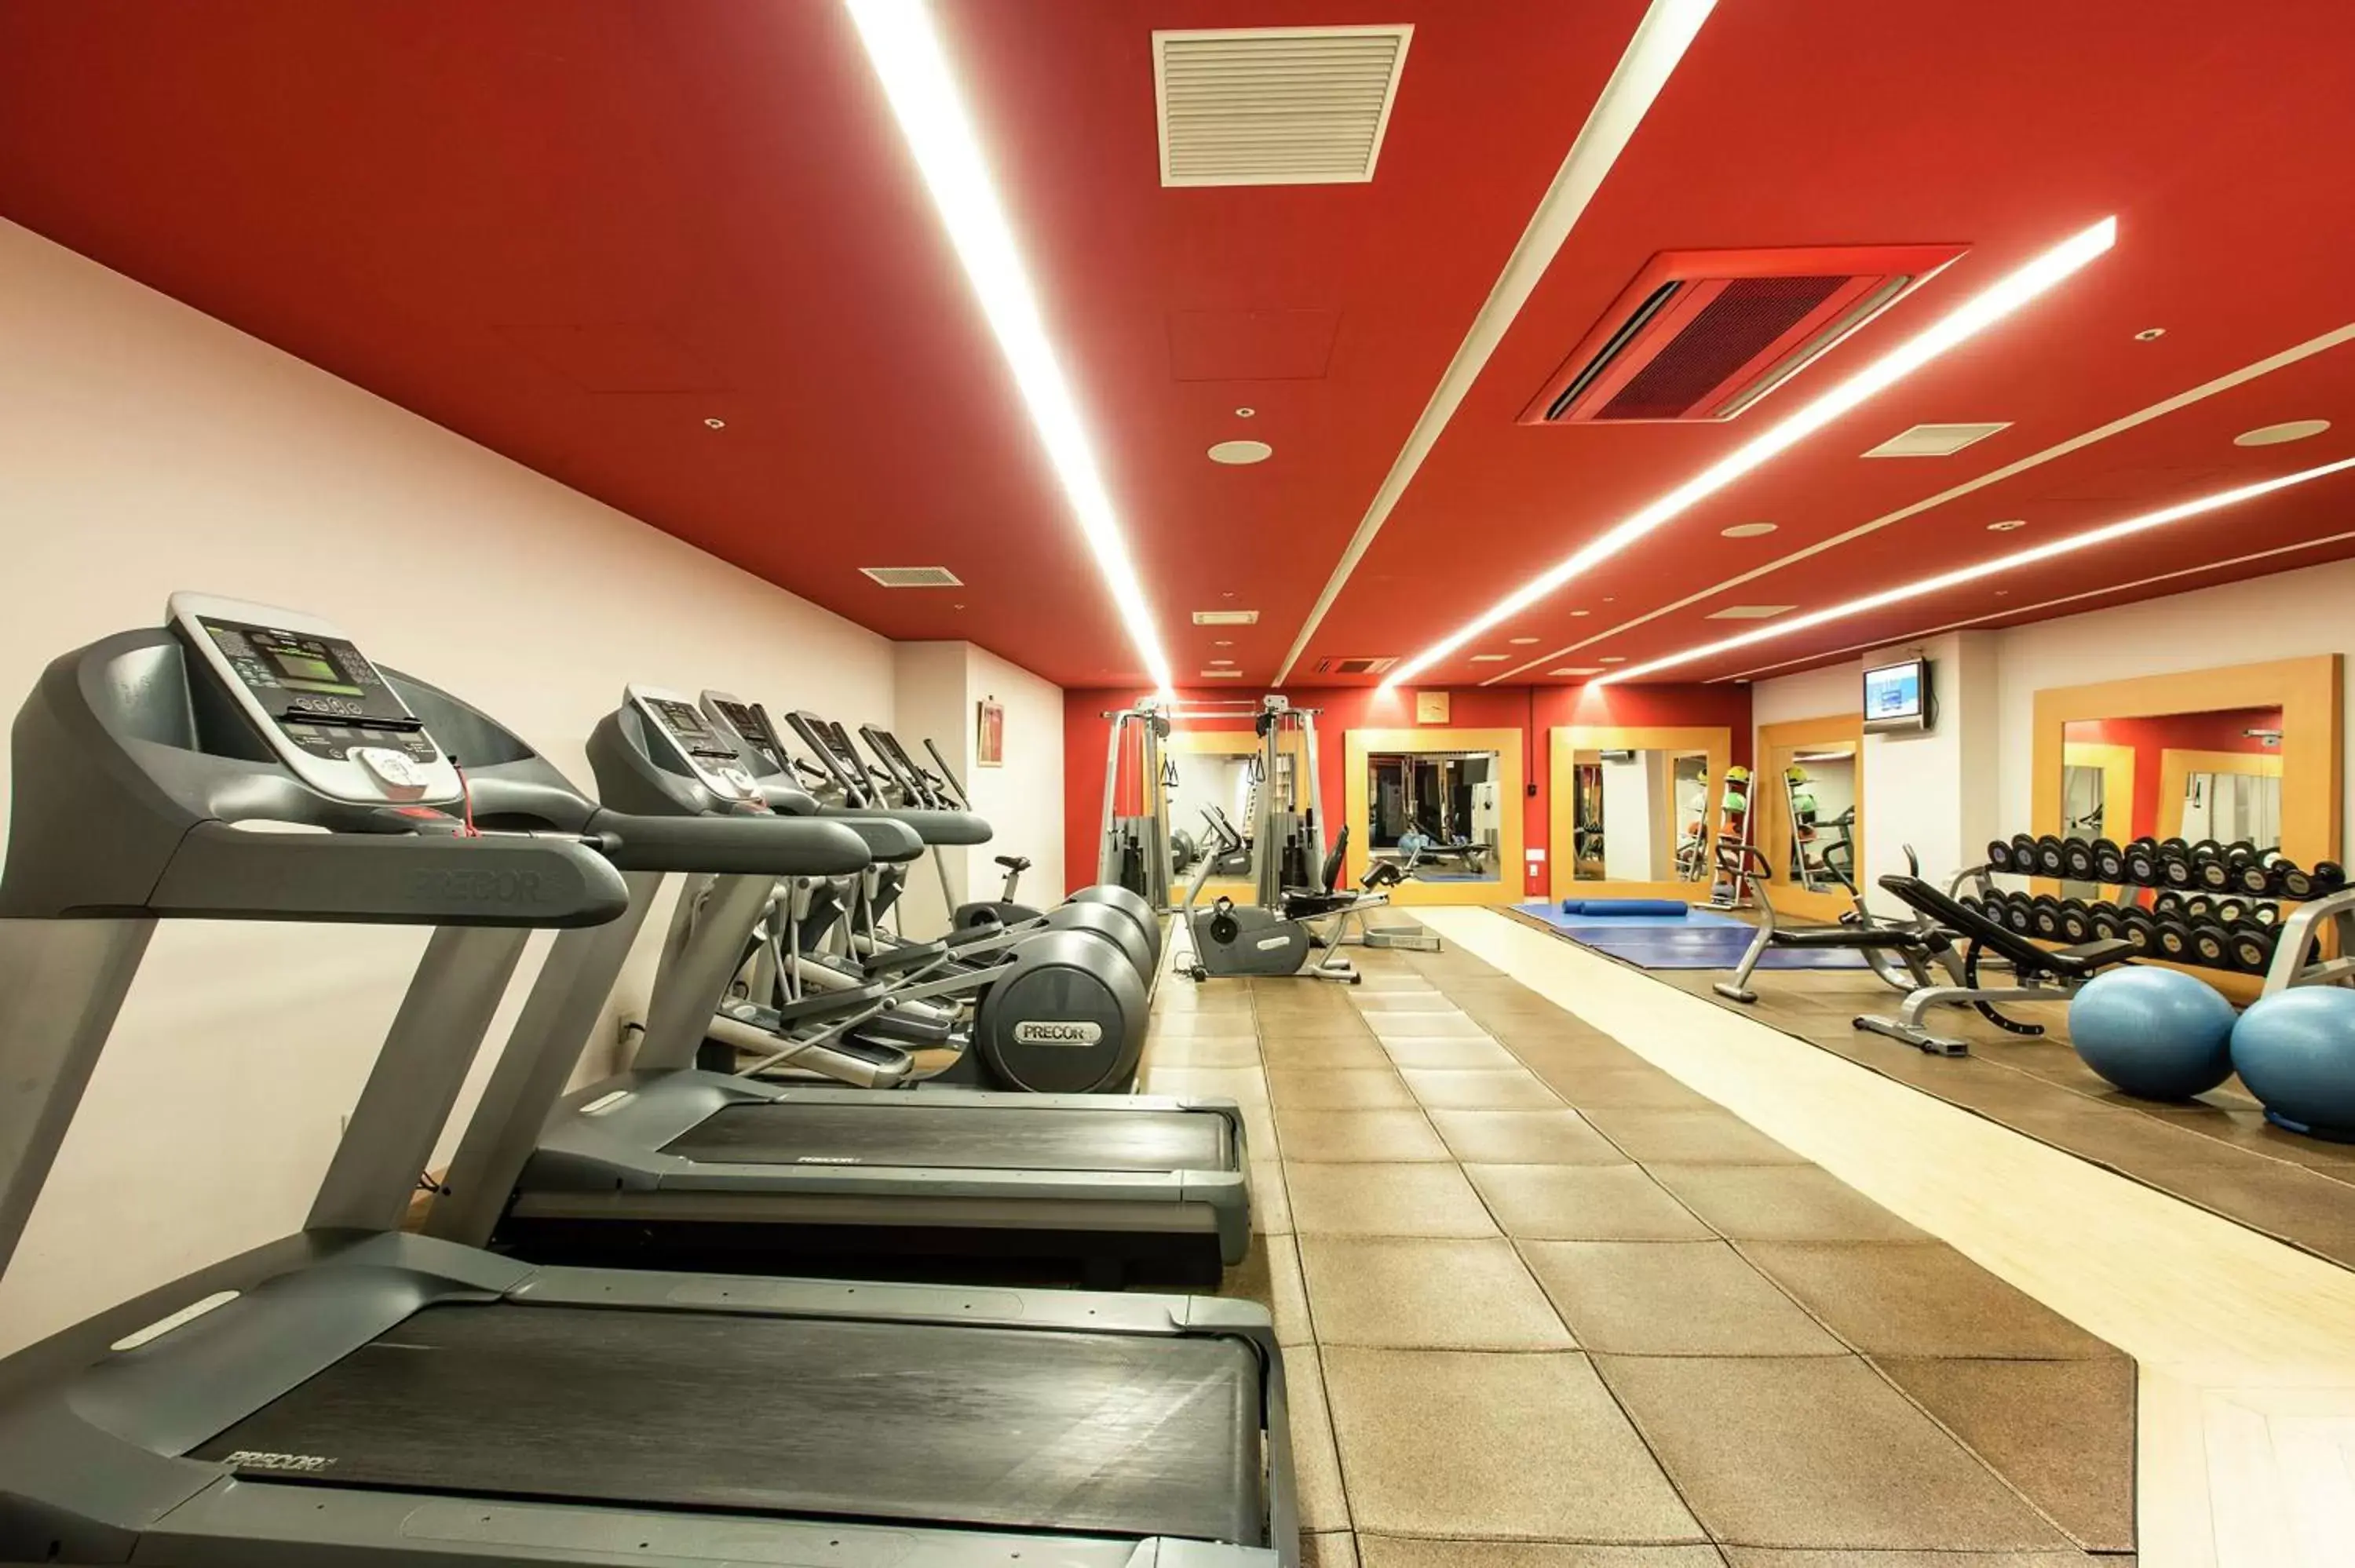 Fitness centre/facilities, Fitness Center/Facilities in Hilton Niseko Village